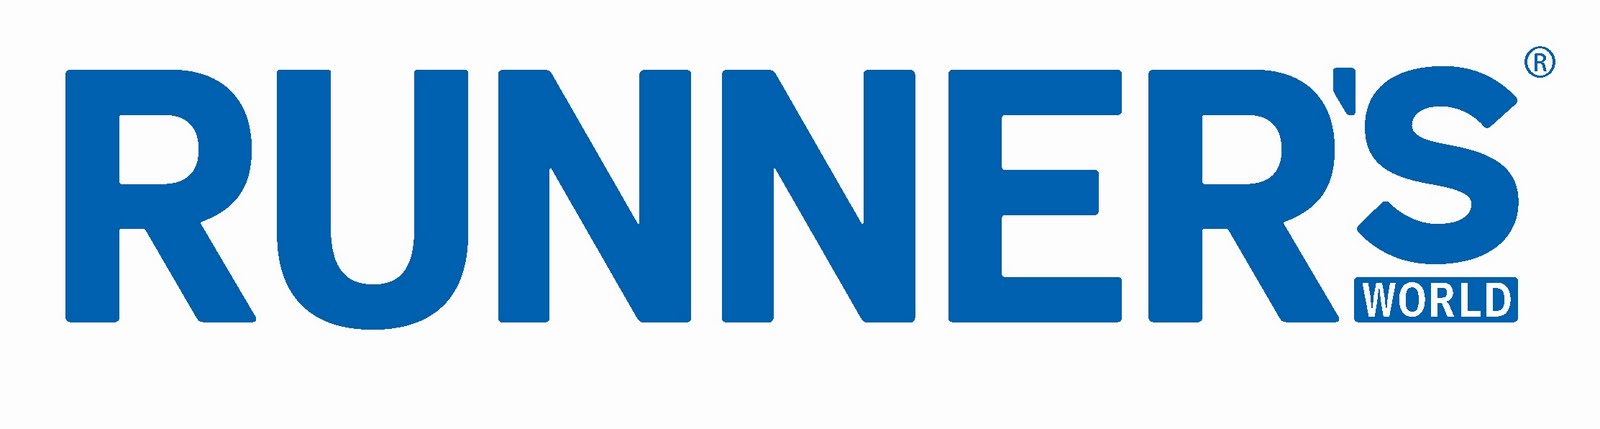 runners world company logo